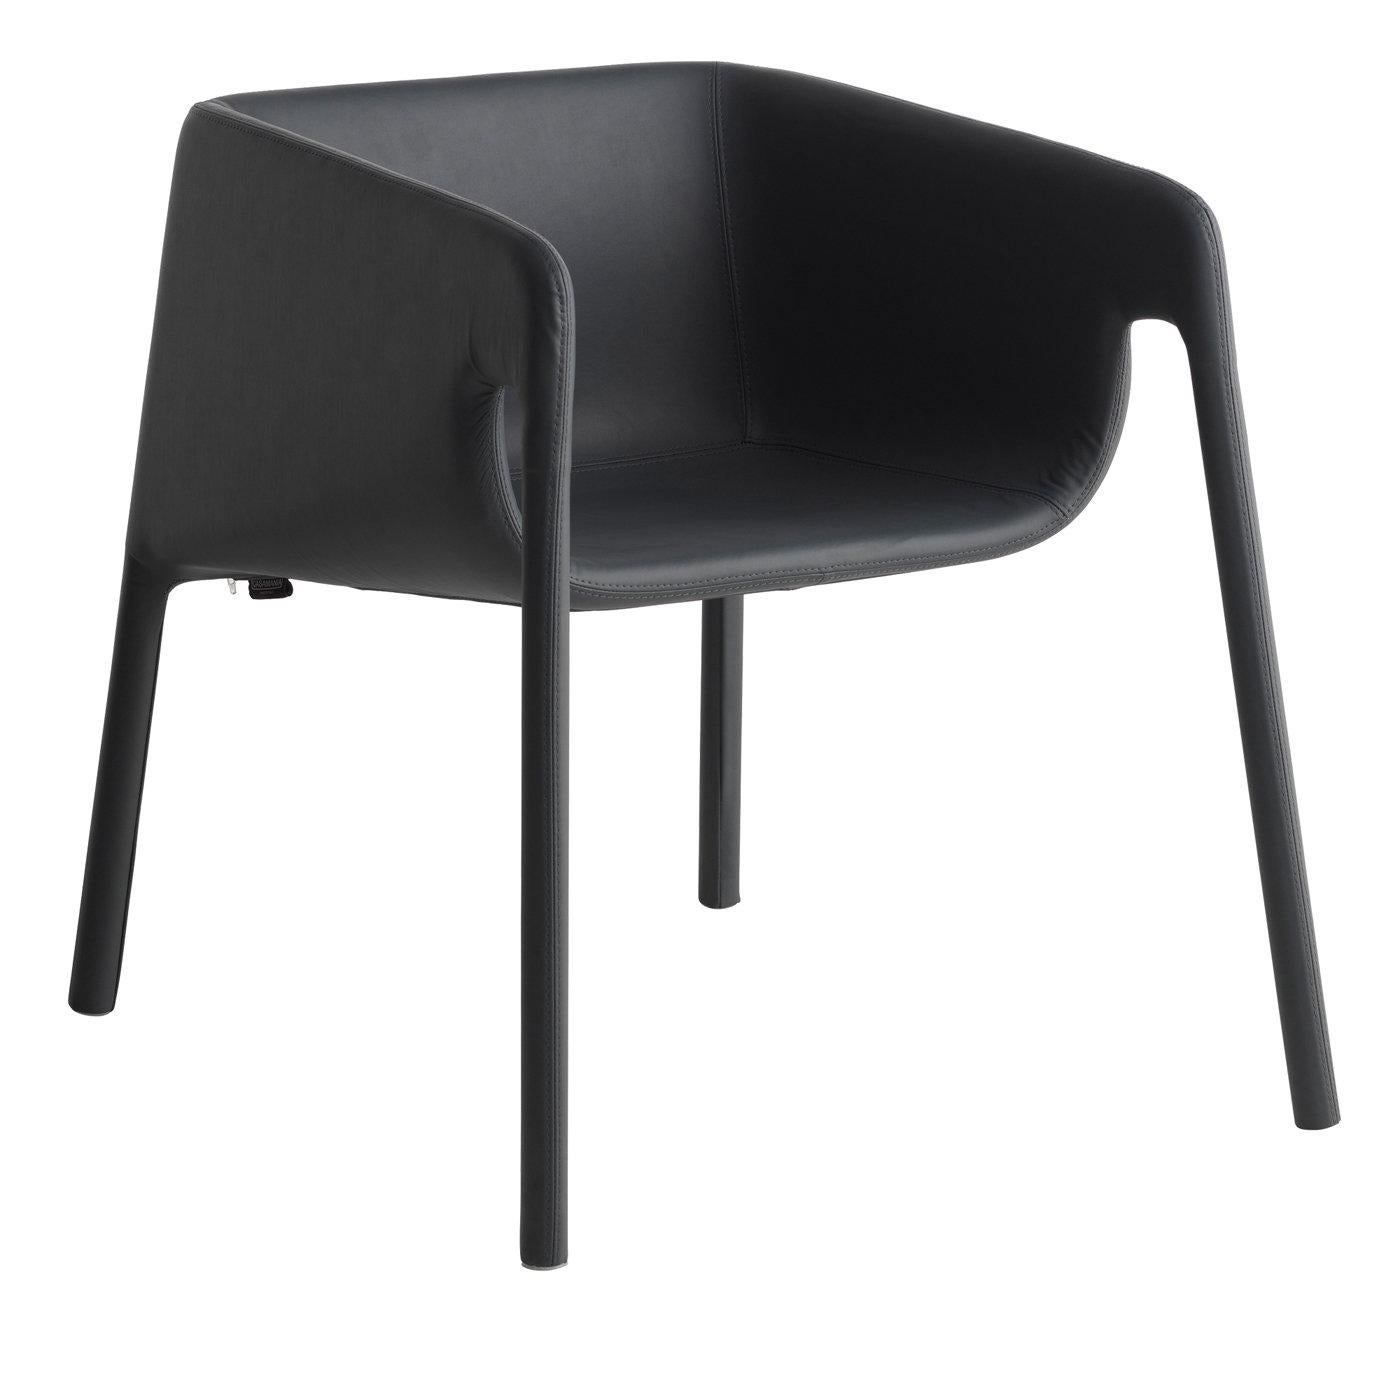 Italian Lobby Black Leather Chair by StokkeAustad